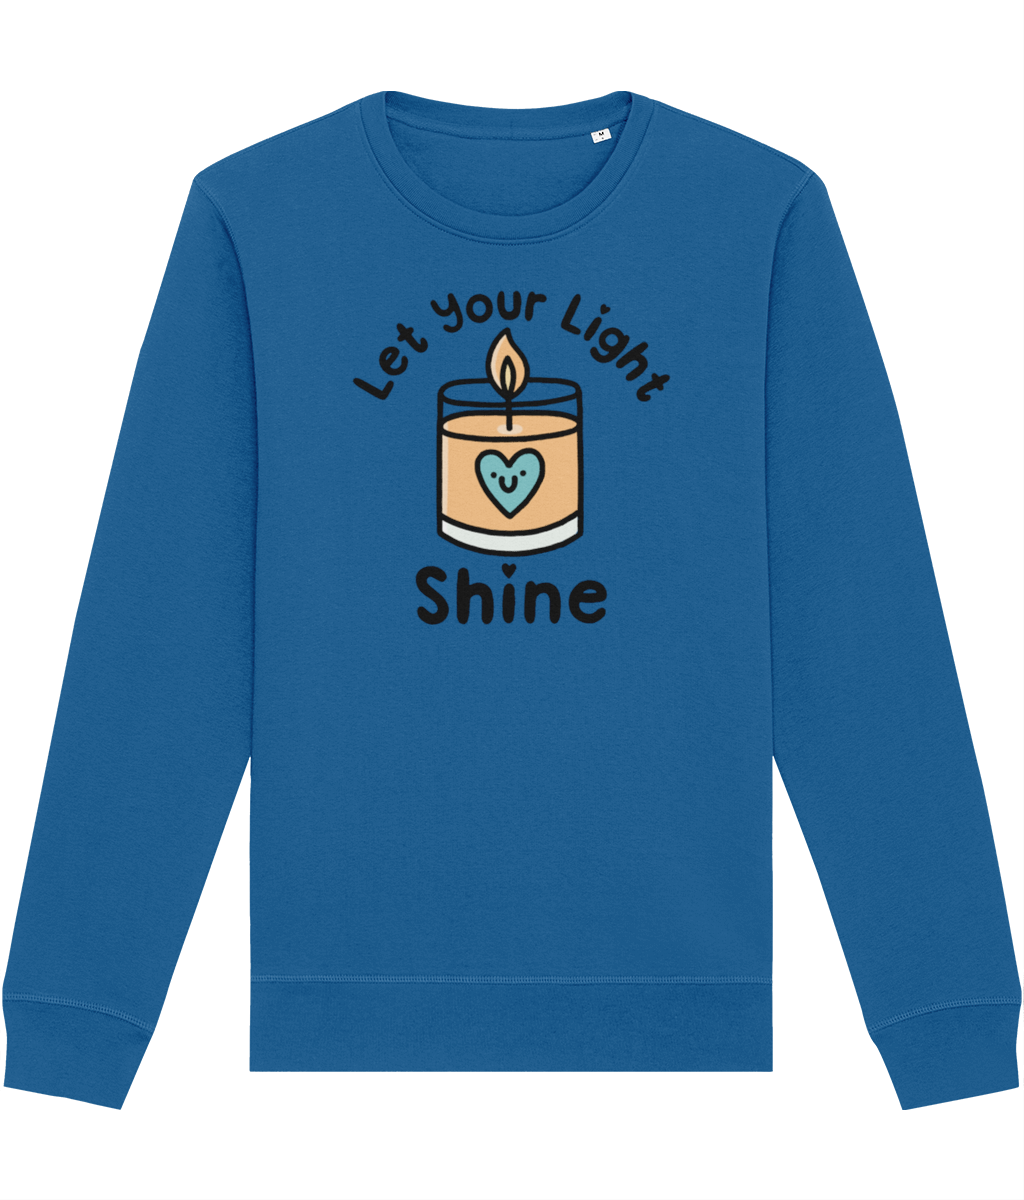 Pawsitivity Sweatshirt - Let Your Light Shine (Multi Colours Available)